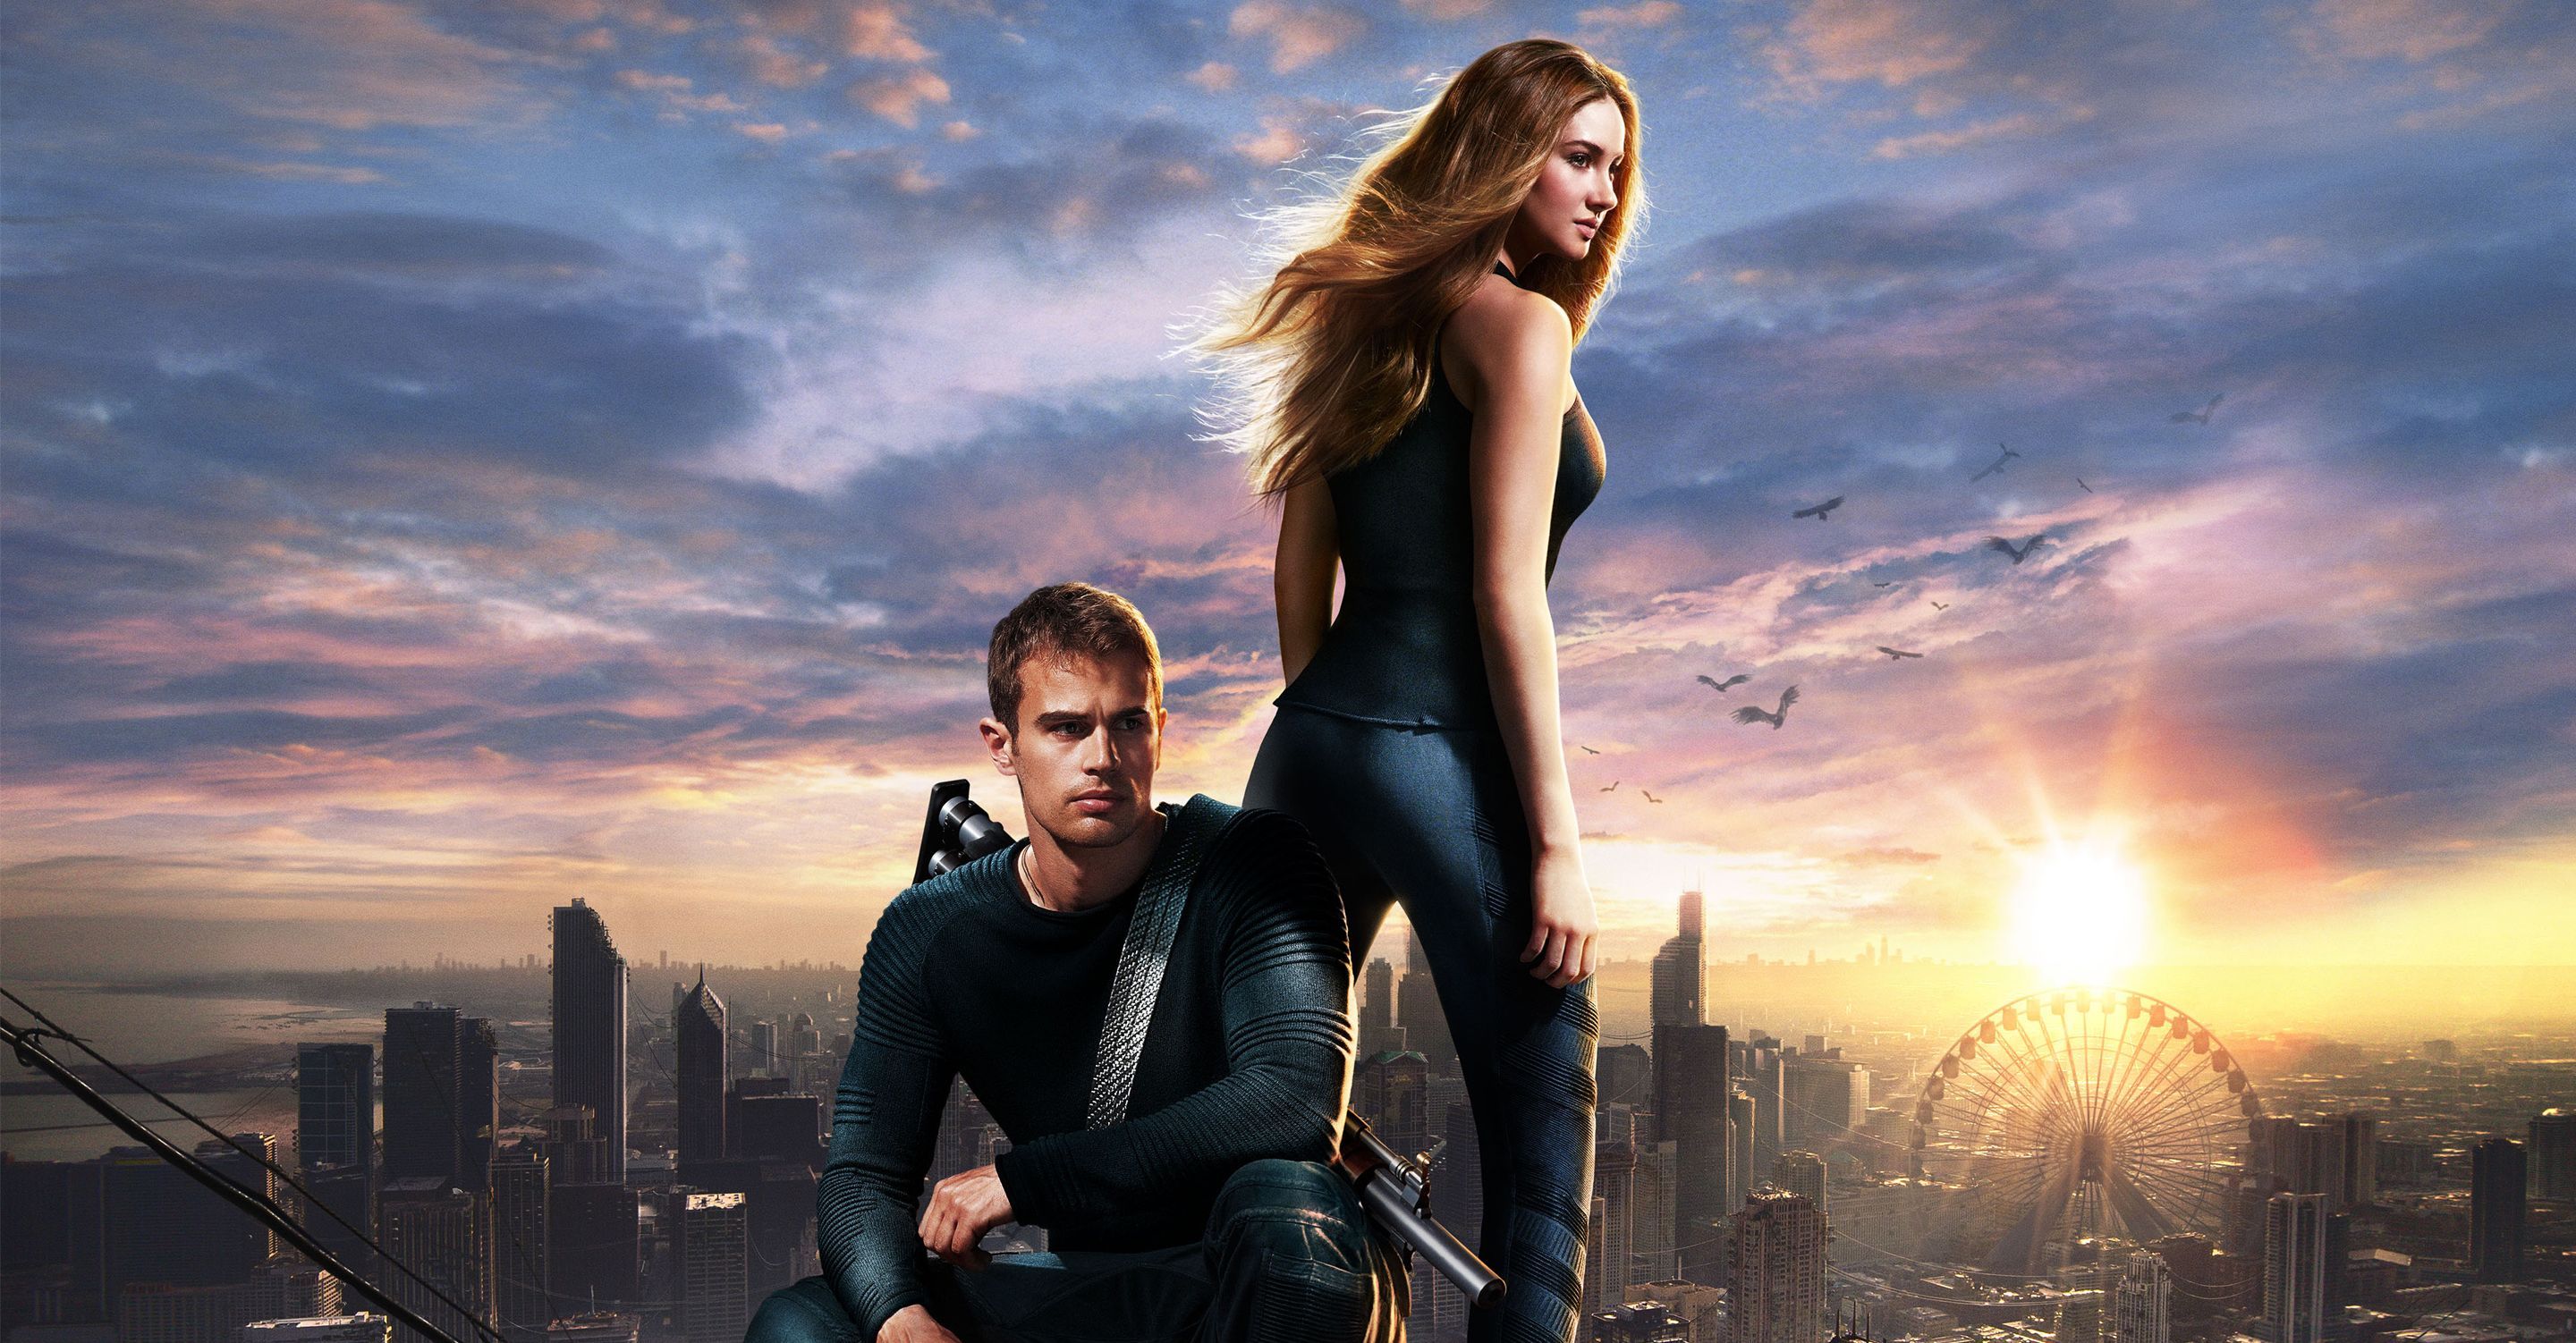 Divergent sequel 'Insurgent' adds 3 new cast members